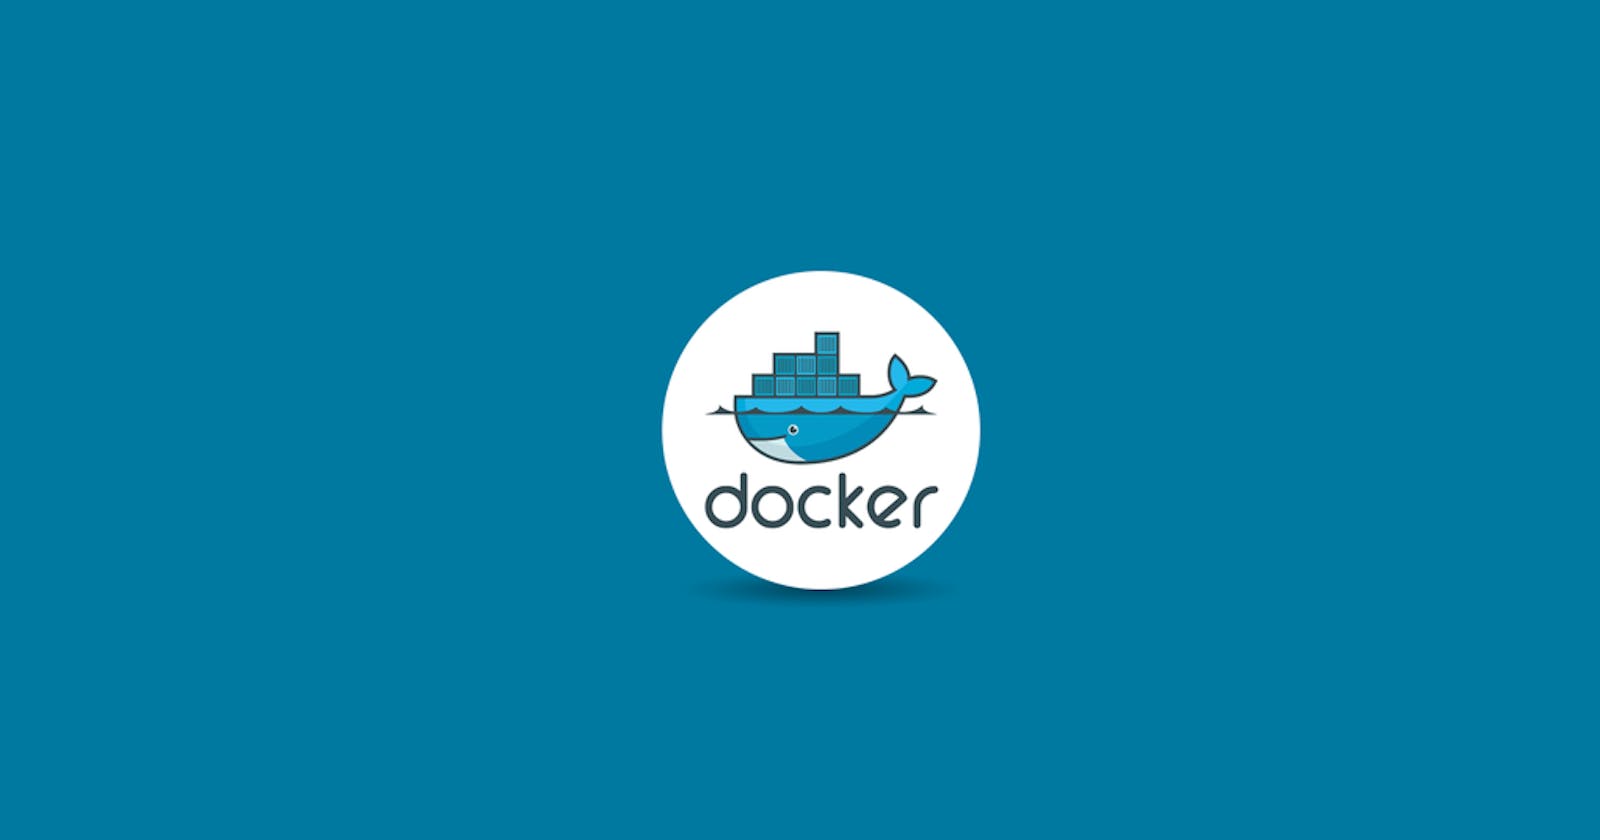 Everything Docker: Part 1